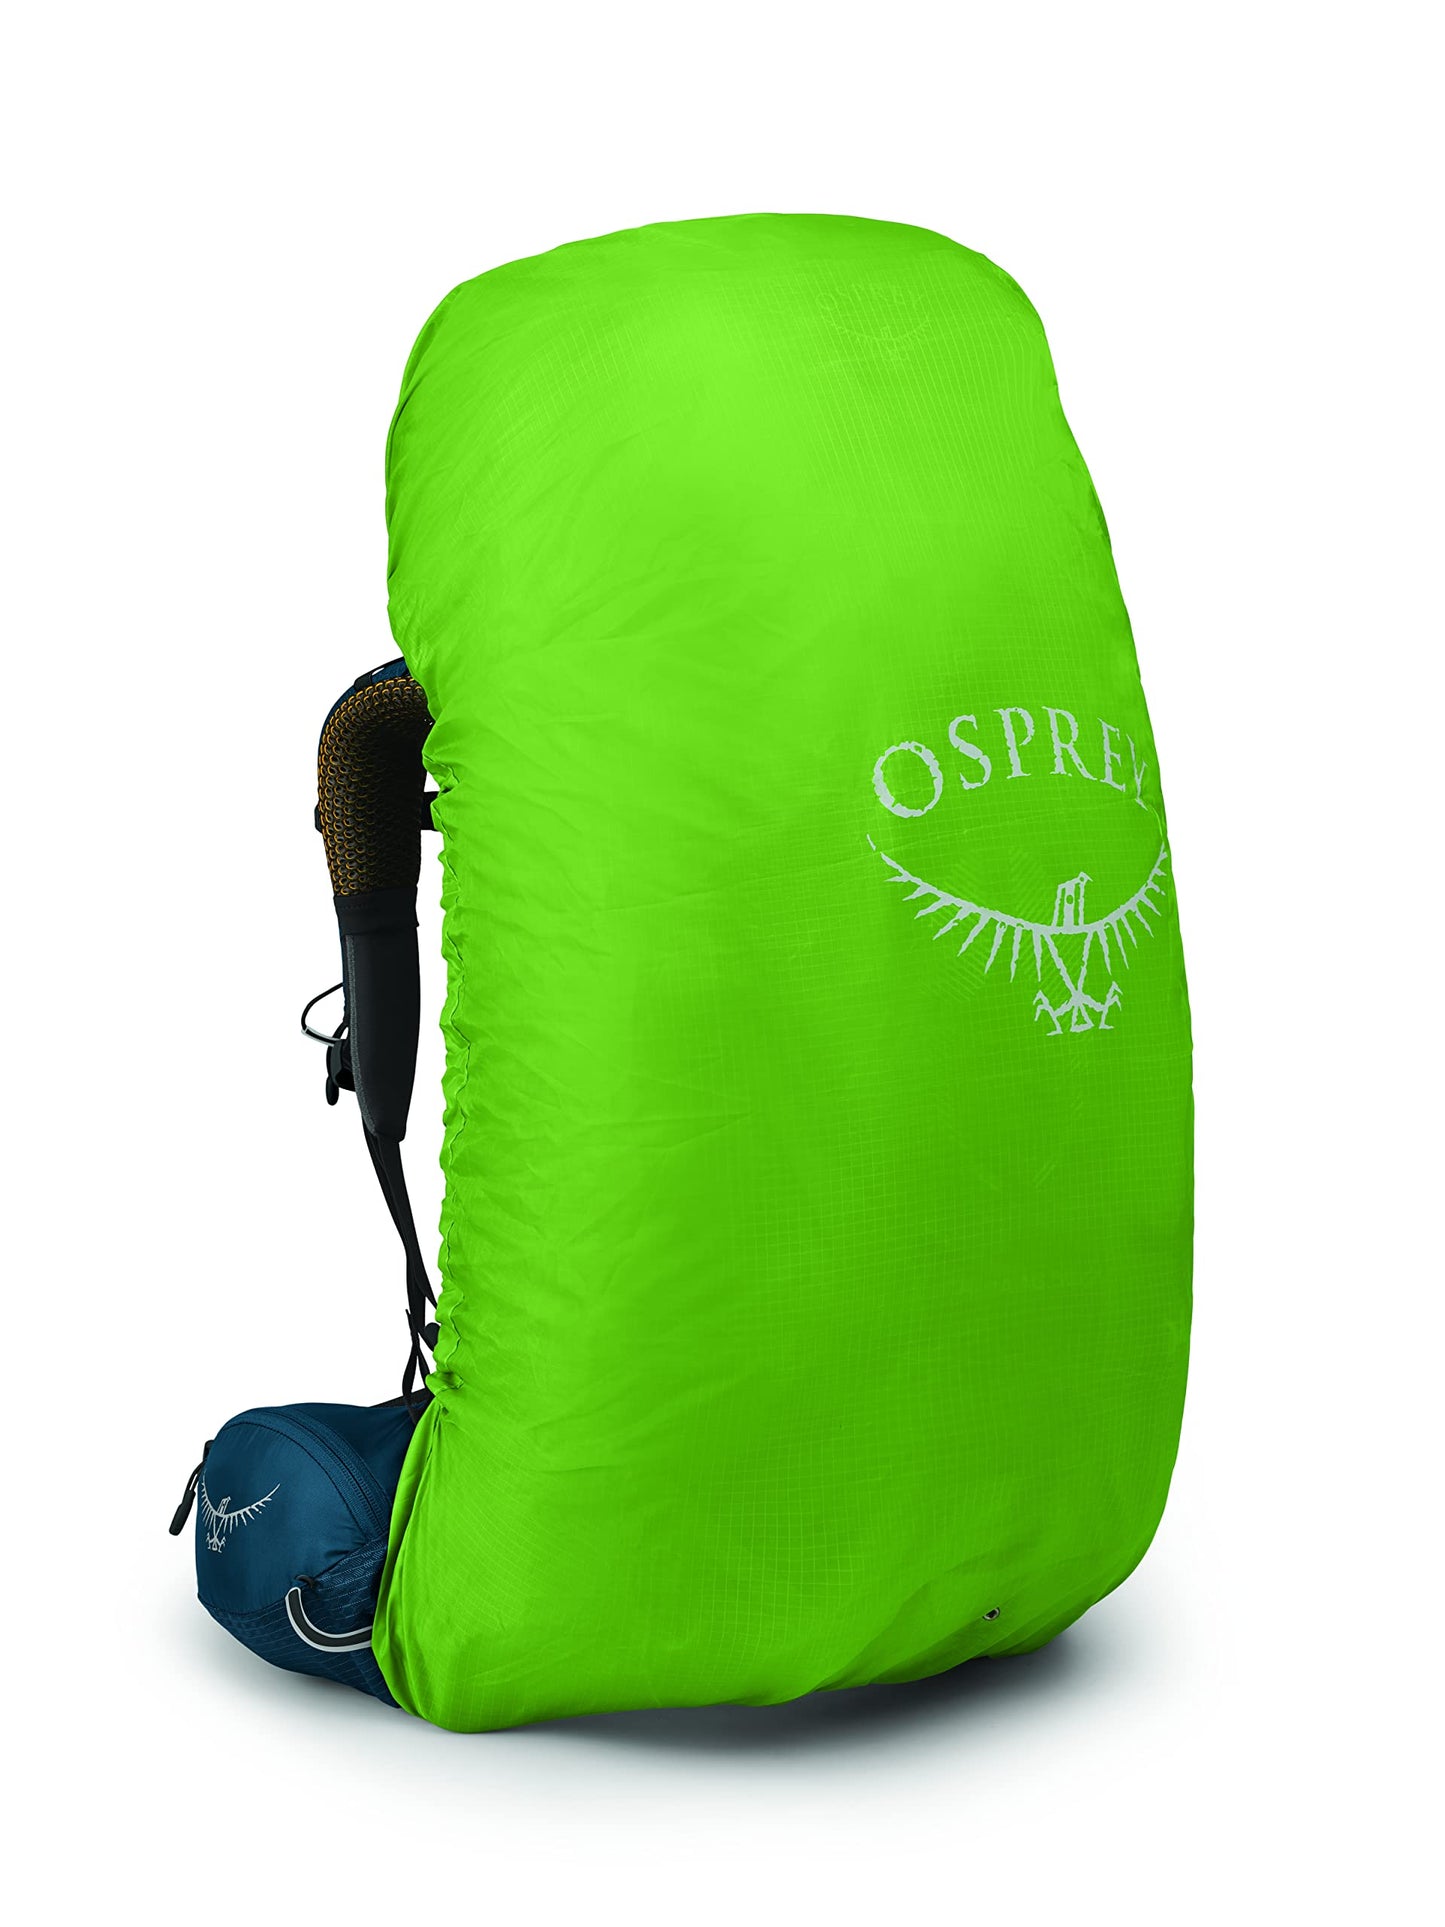 Osprey Atmos AG 65 Men's Backpacking Backpack